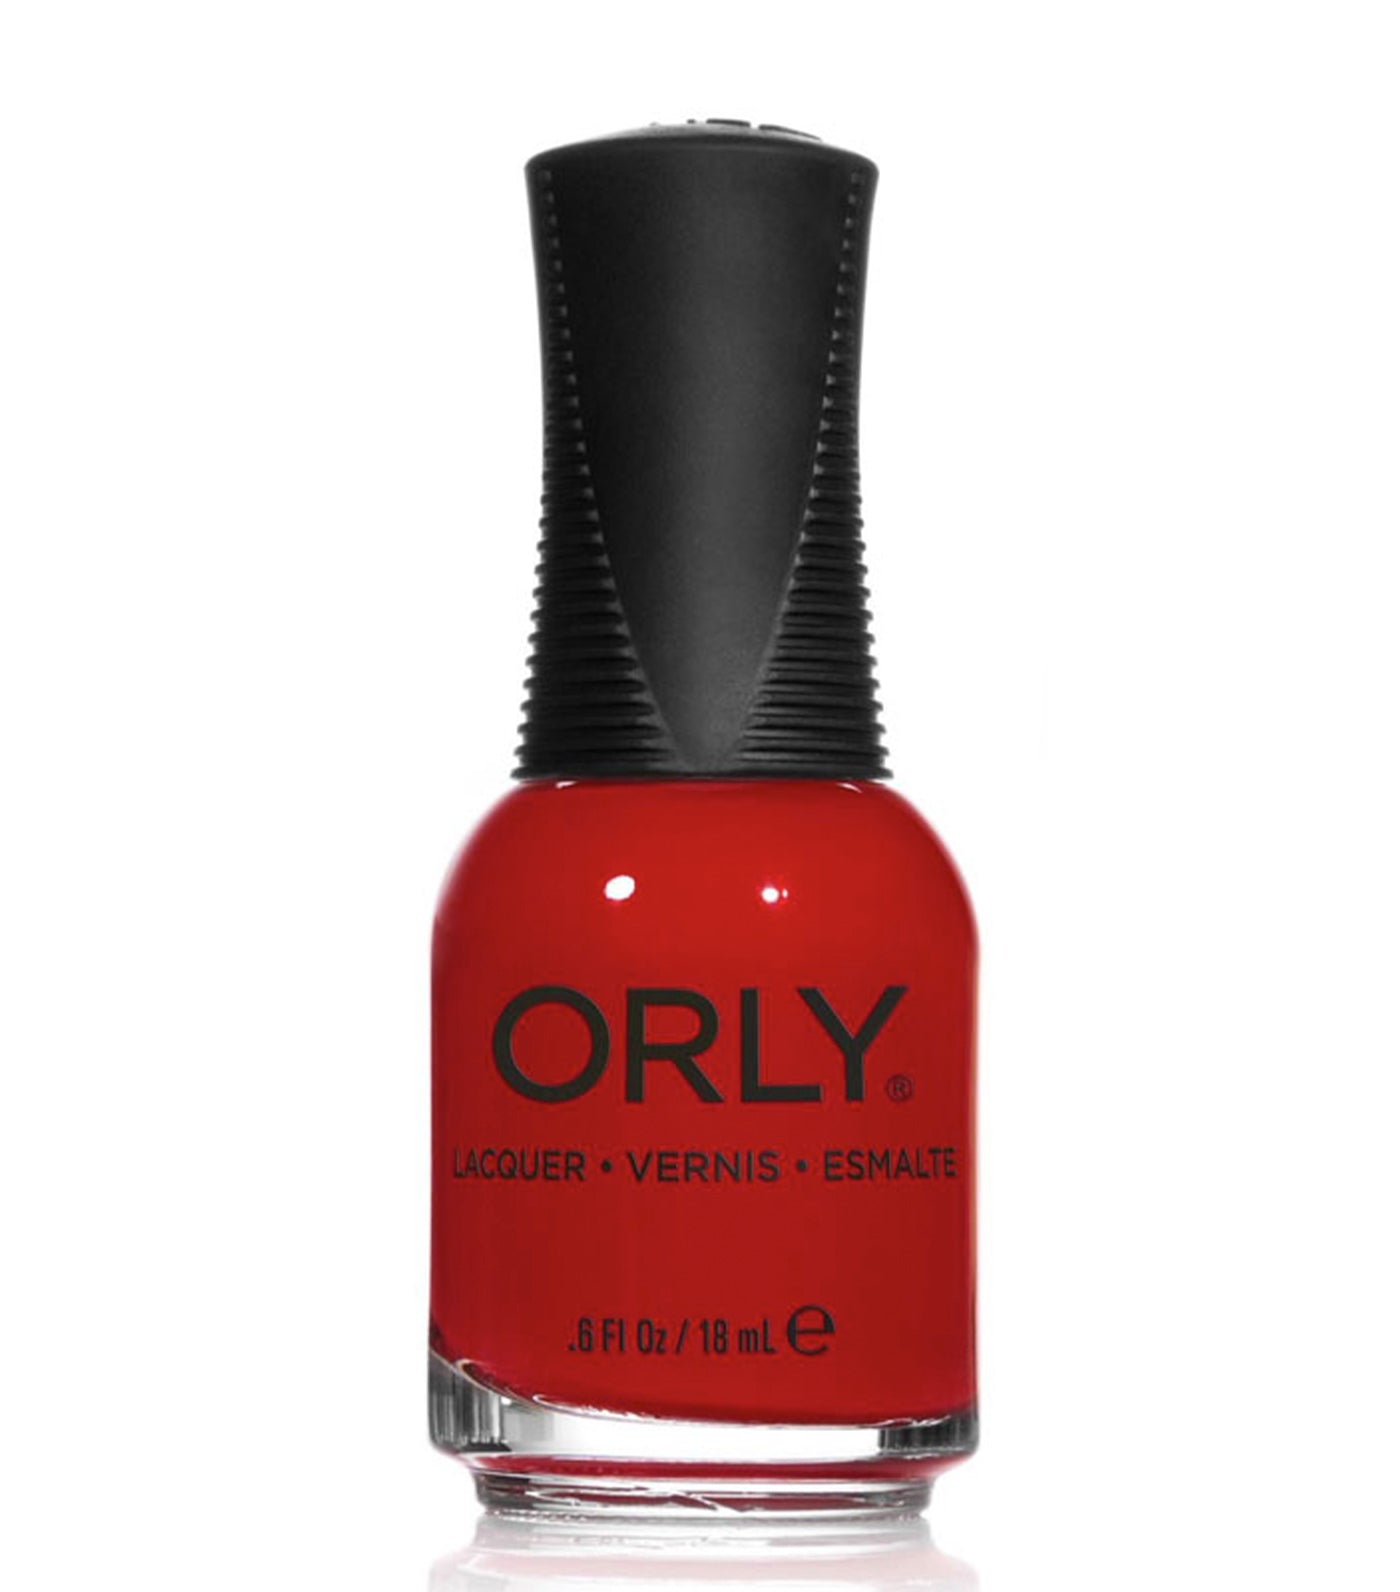 Orly Nail Polish, Monroe's Red - 0.6 oz bottle